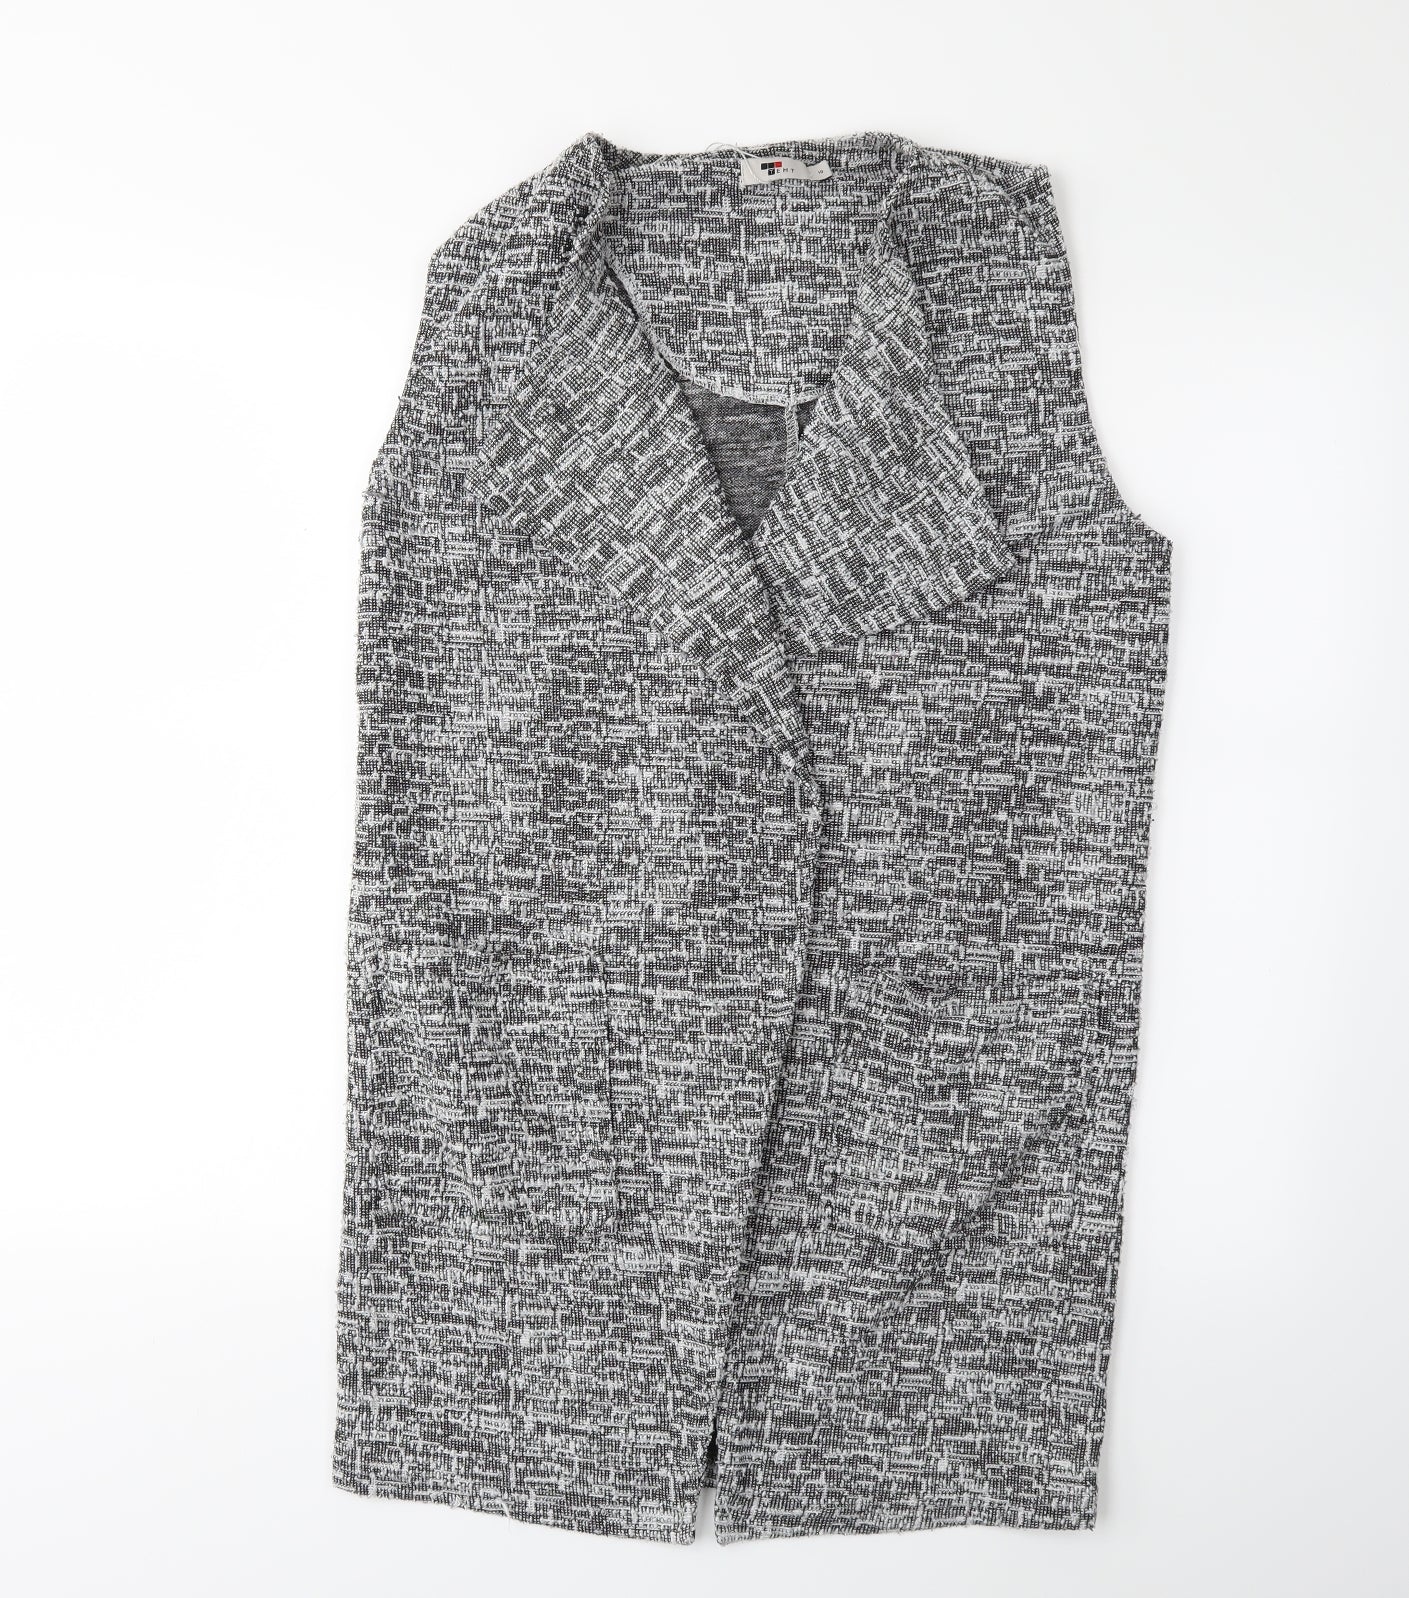 TEMT Womens Grey   Jacket Waistcoat Size 10